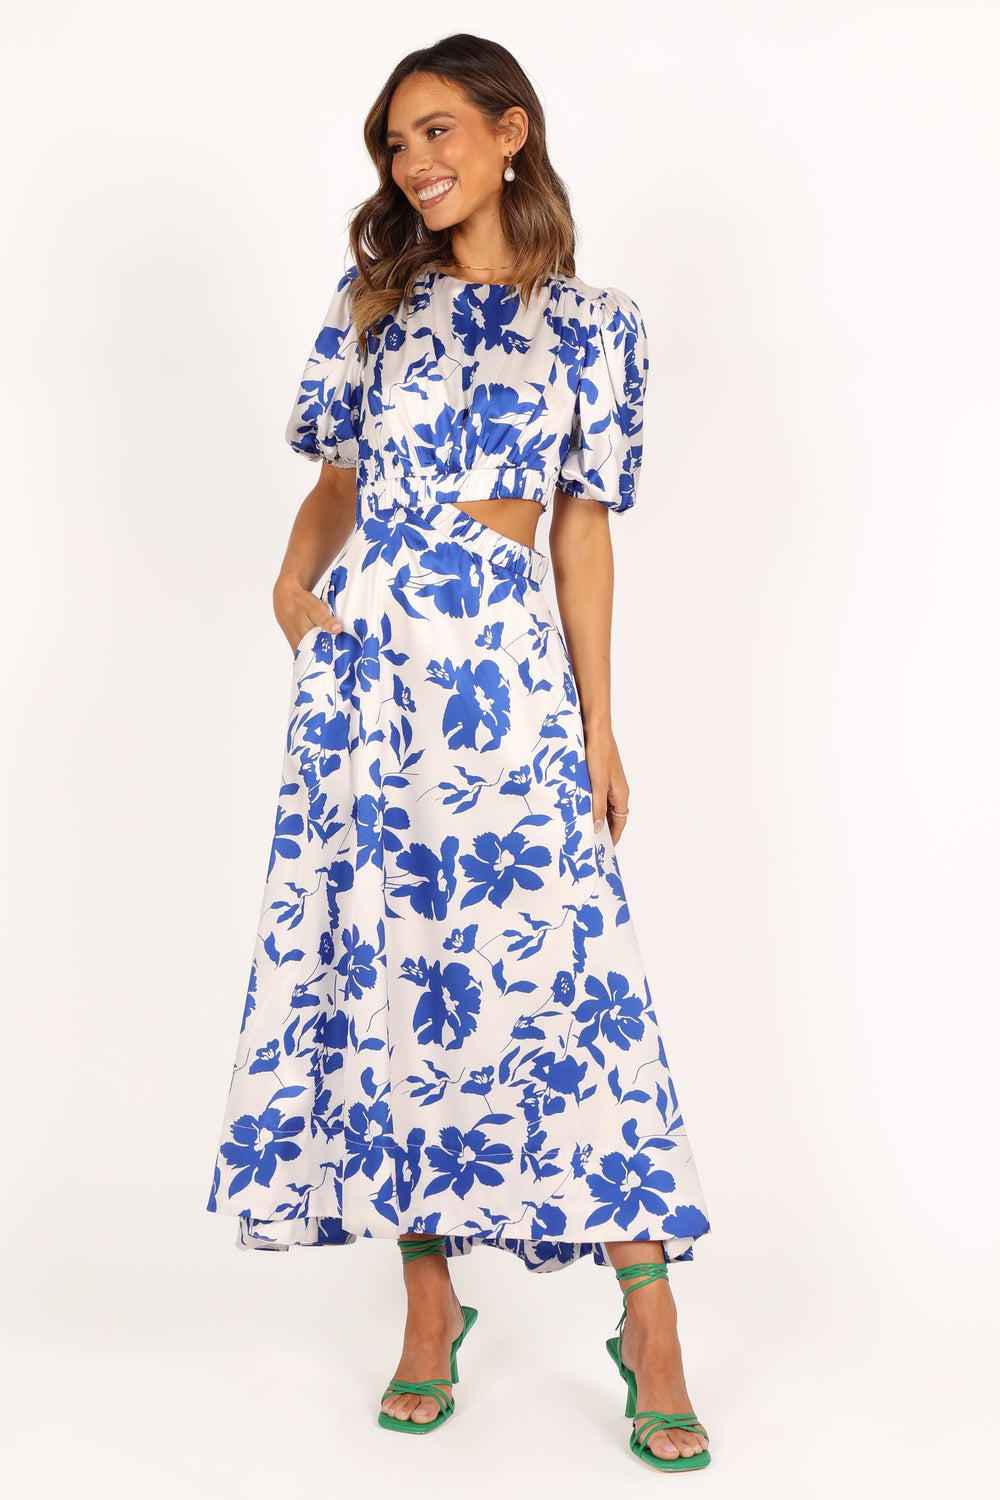 Aminah Puff Sleeve Dress - Blue Floral - Petal & Pup USA